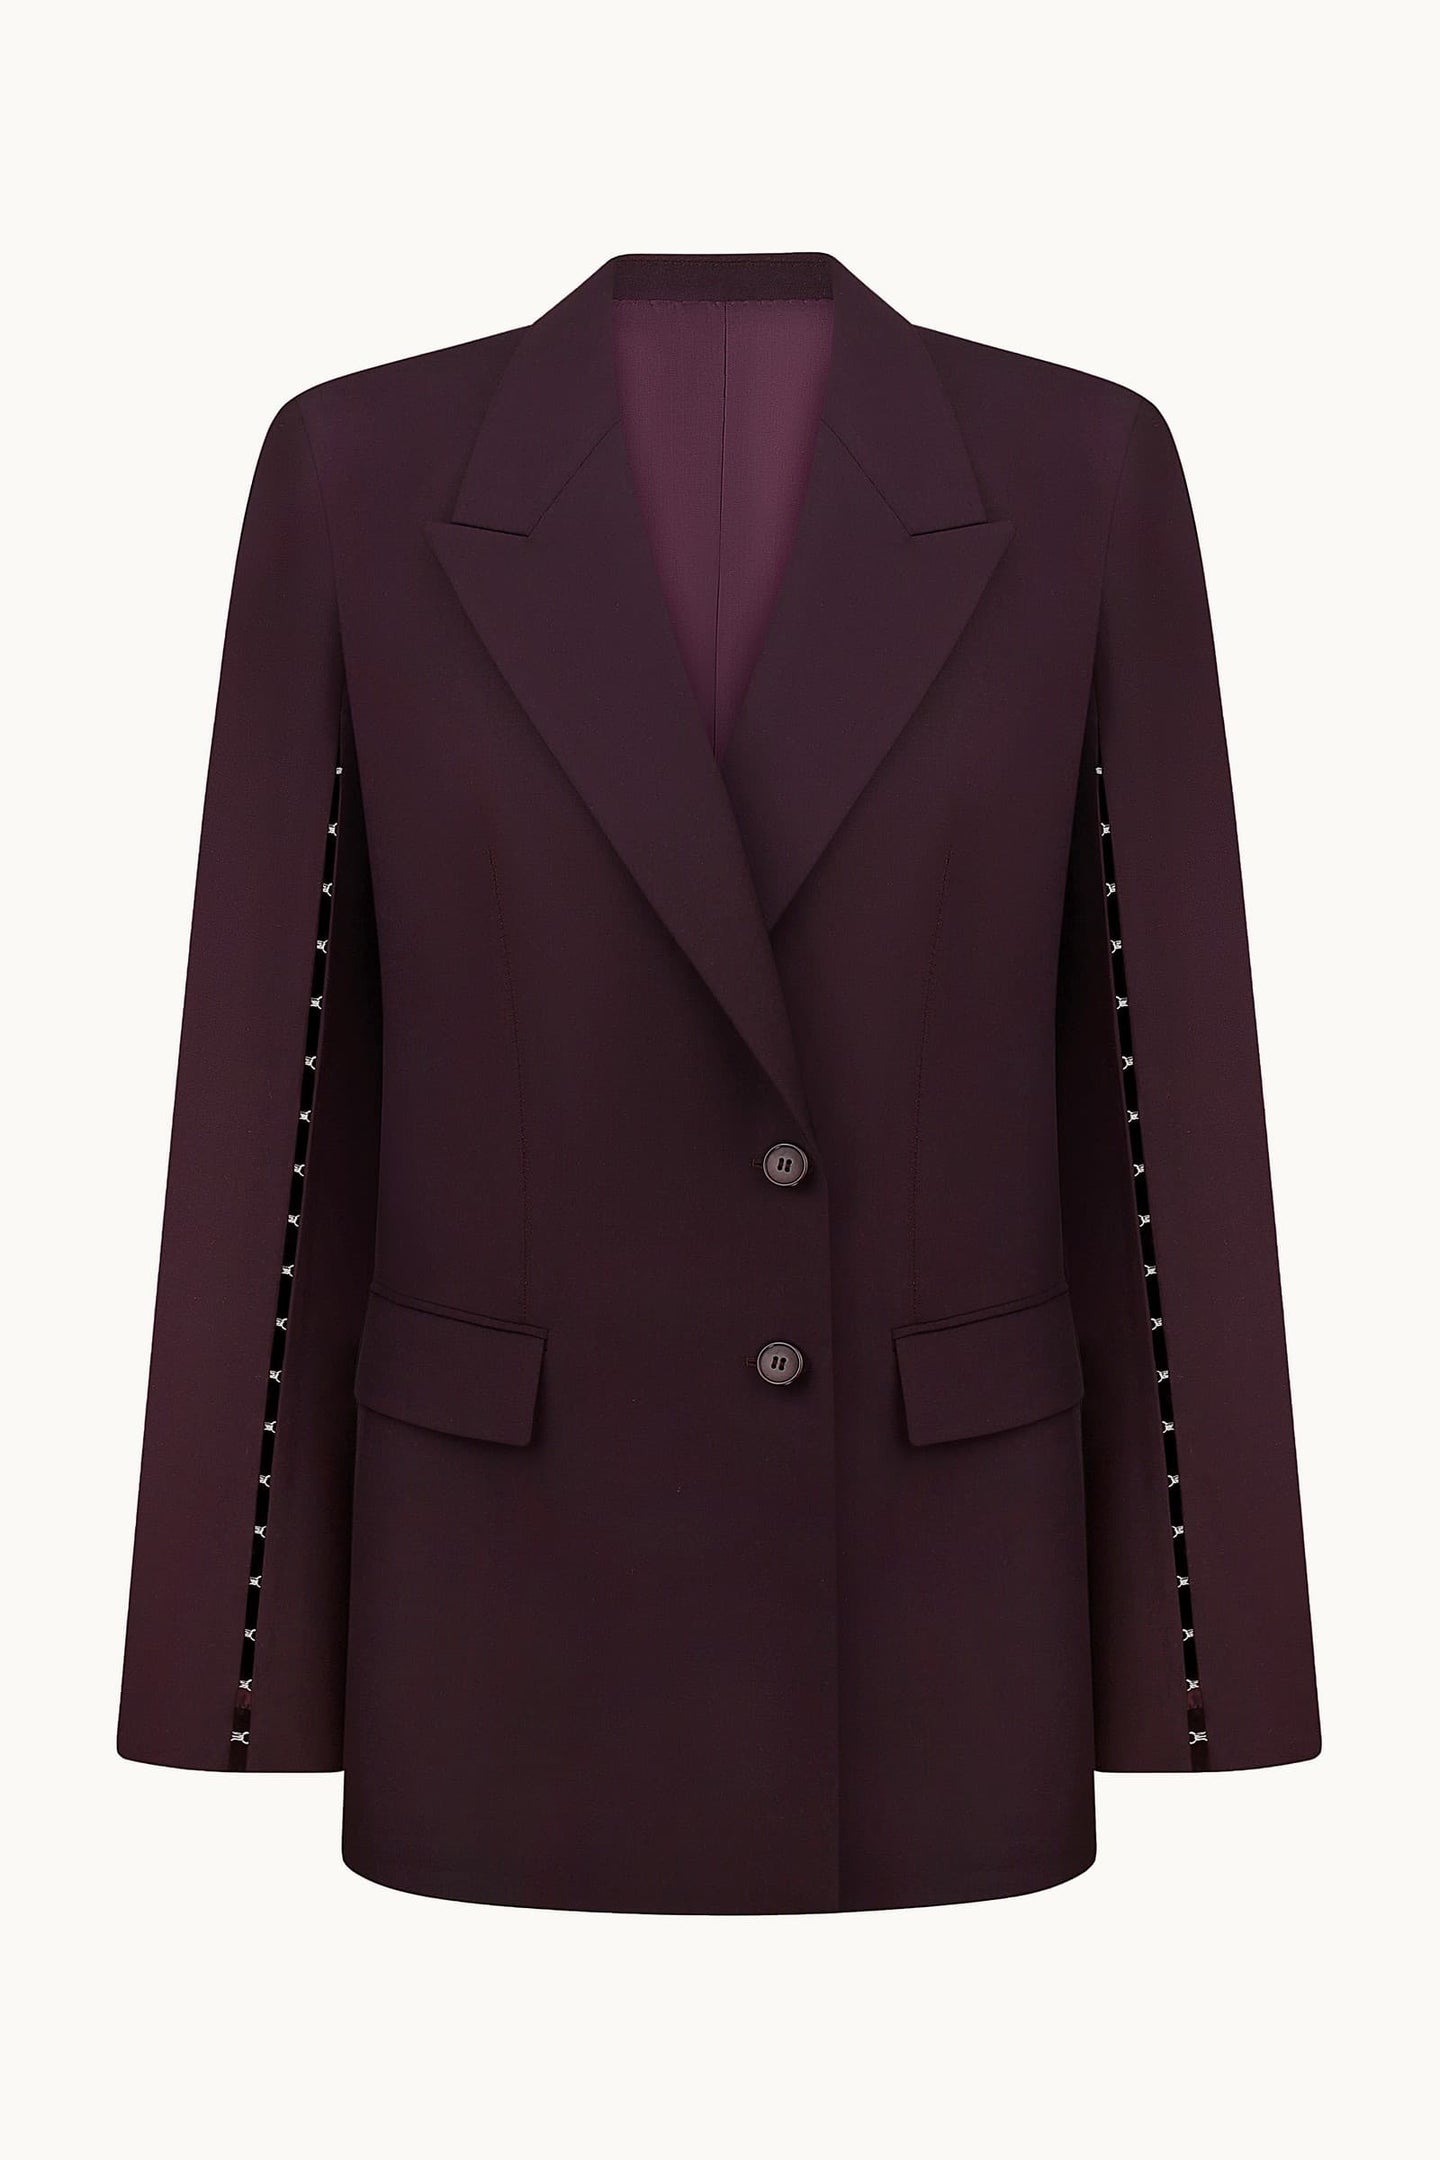 Valentina burgundy jacket front view